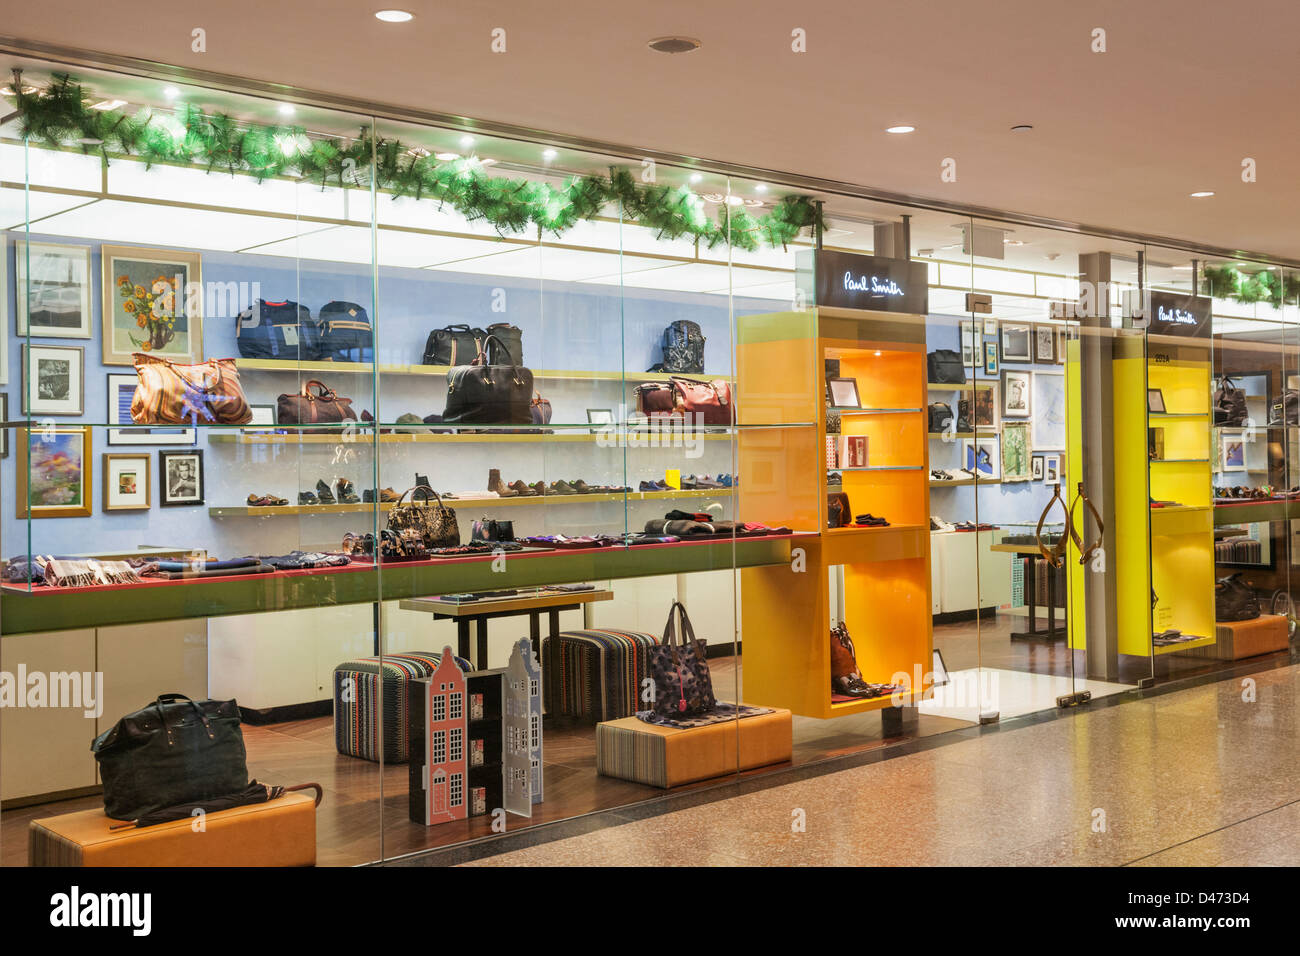 China, Hong Kong, Central, Landmark Shopping Mall, Paul Smith Retail Store  Stock Photo - Alamy